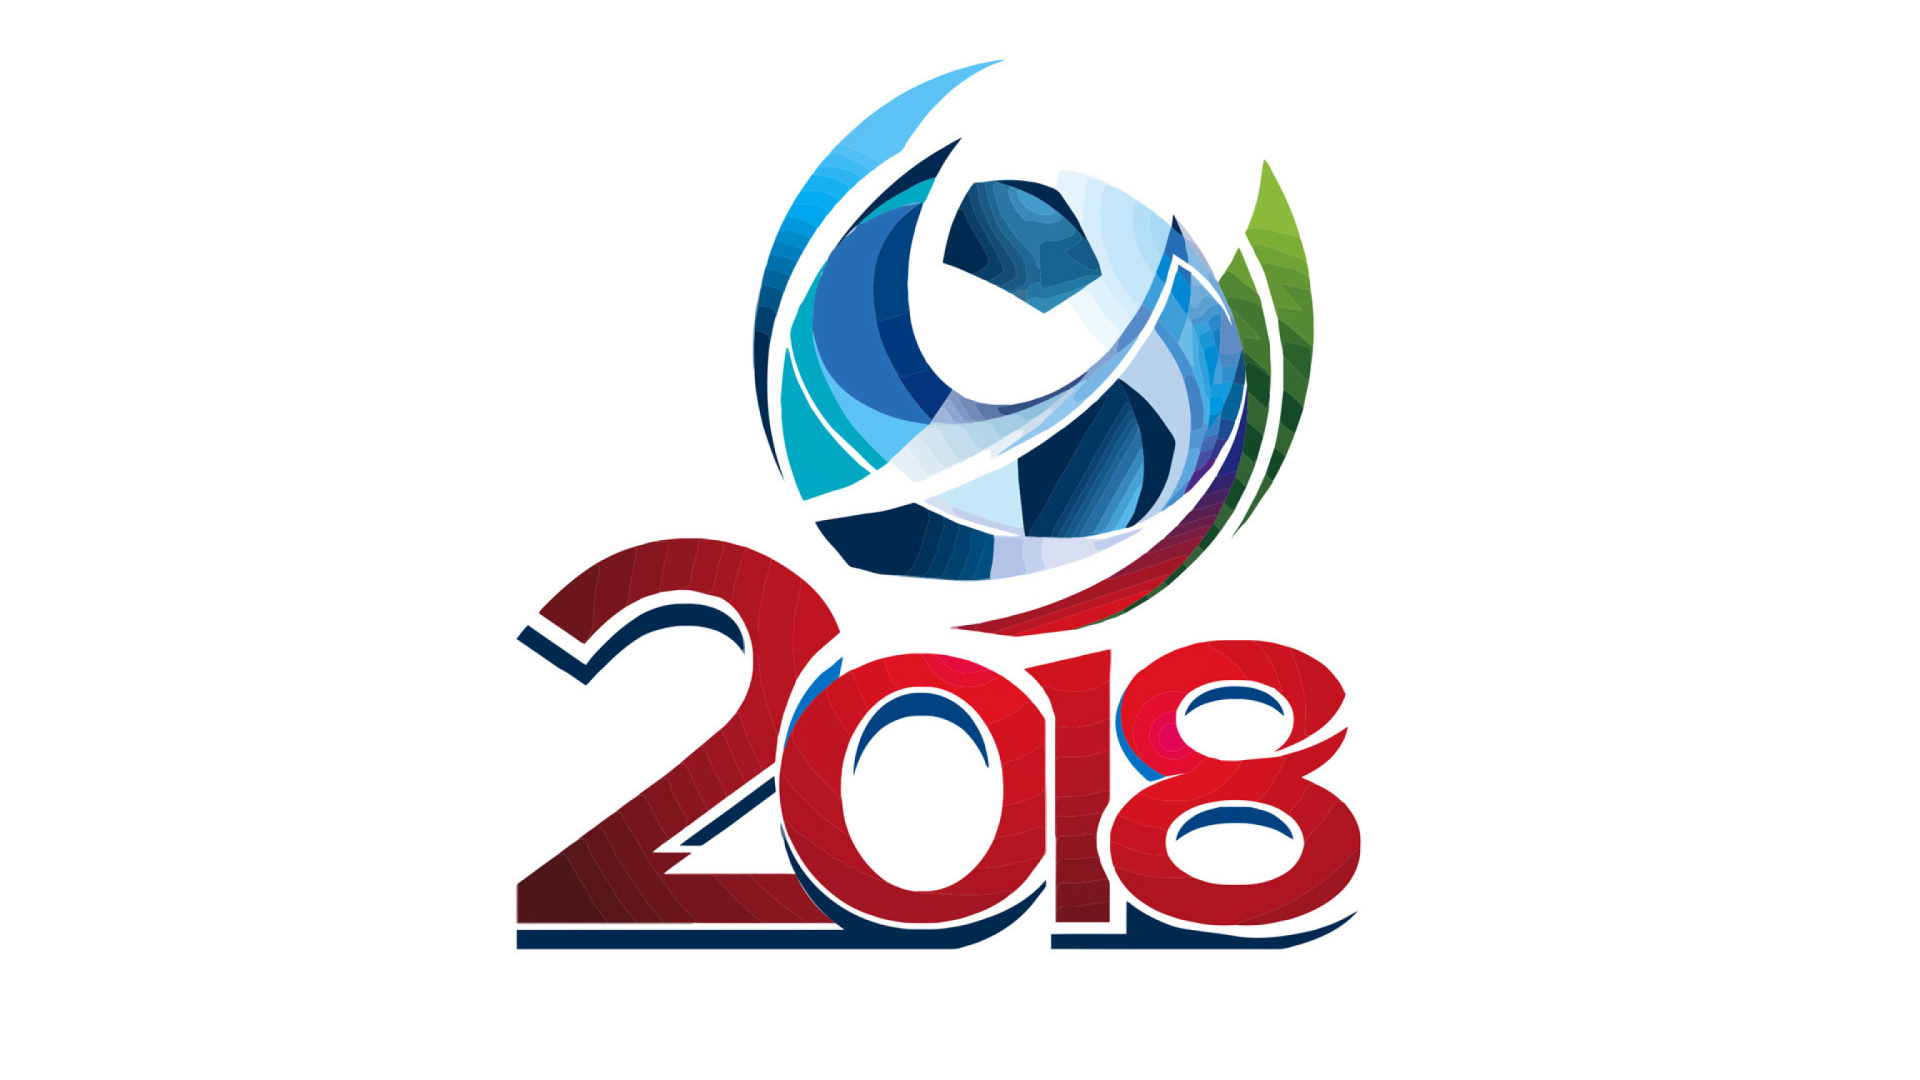 2018 FIFA World Cup in Russia wallpaper 1920x1080